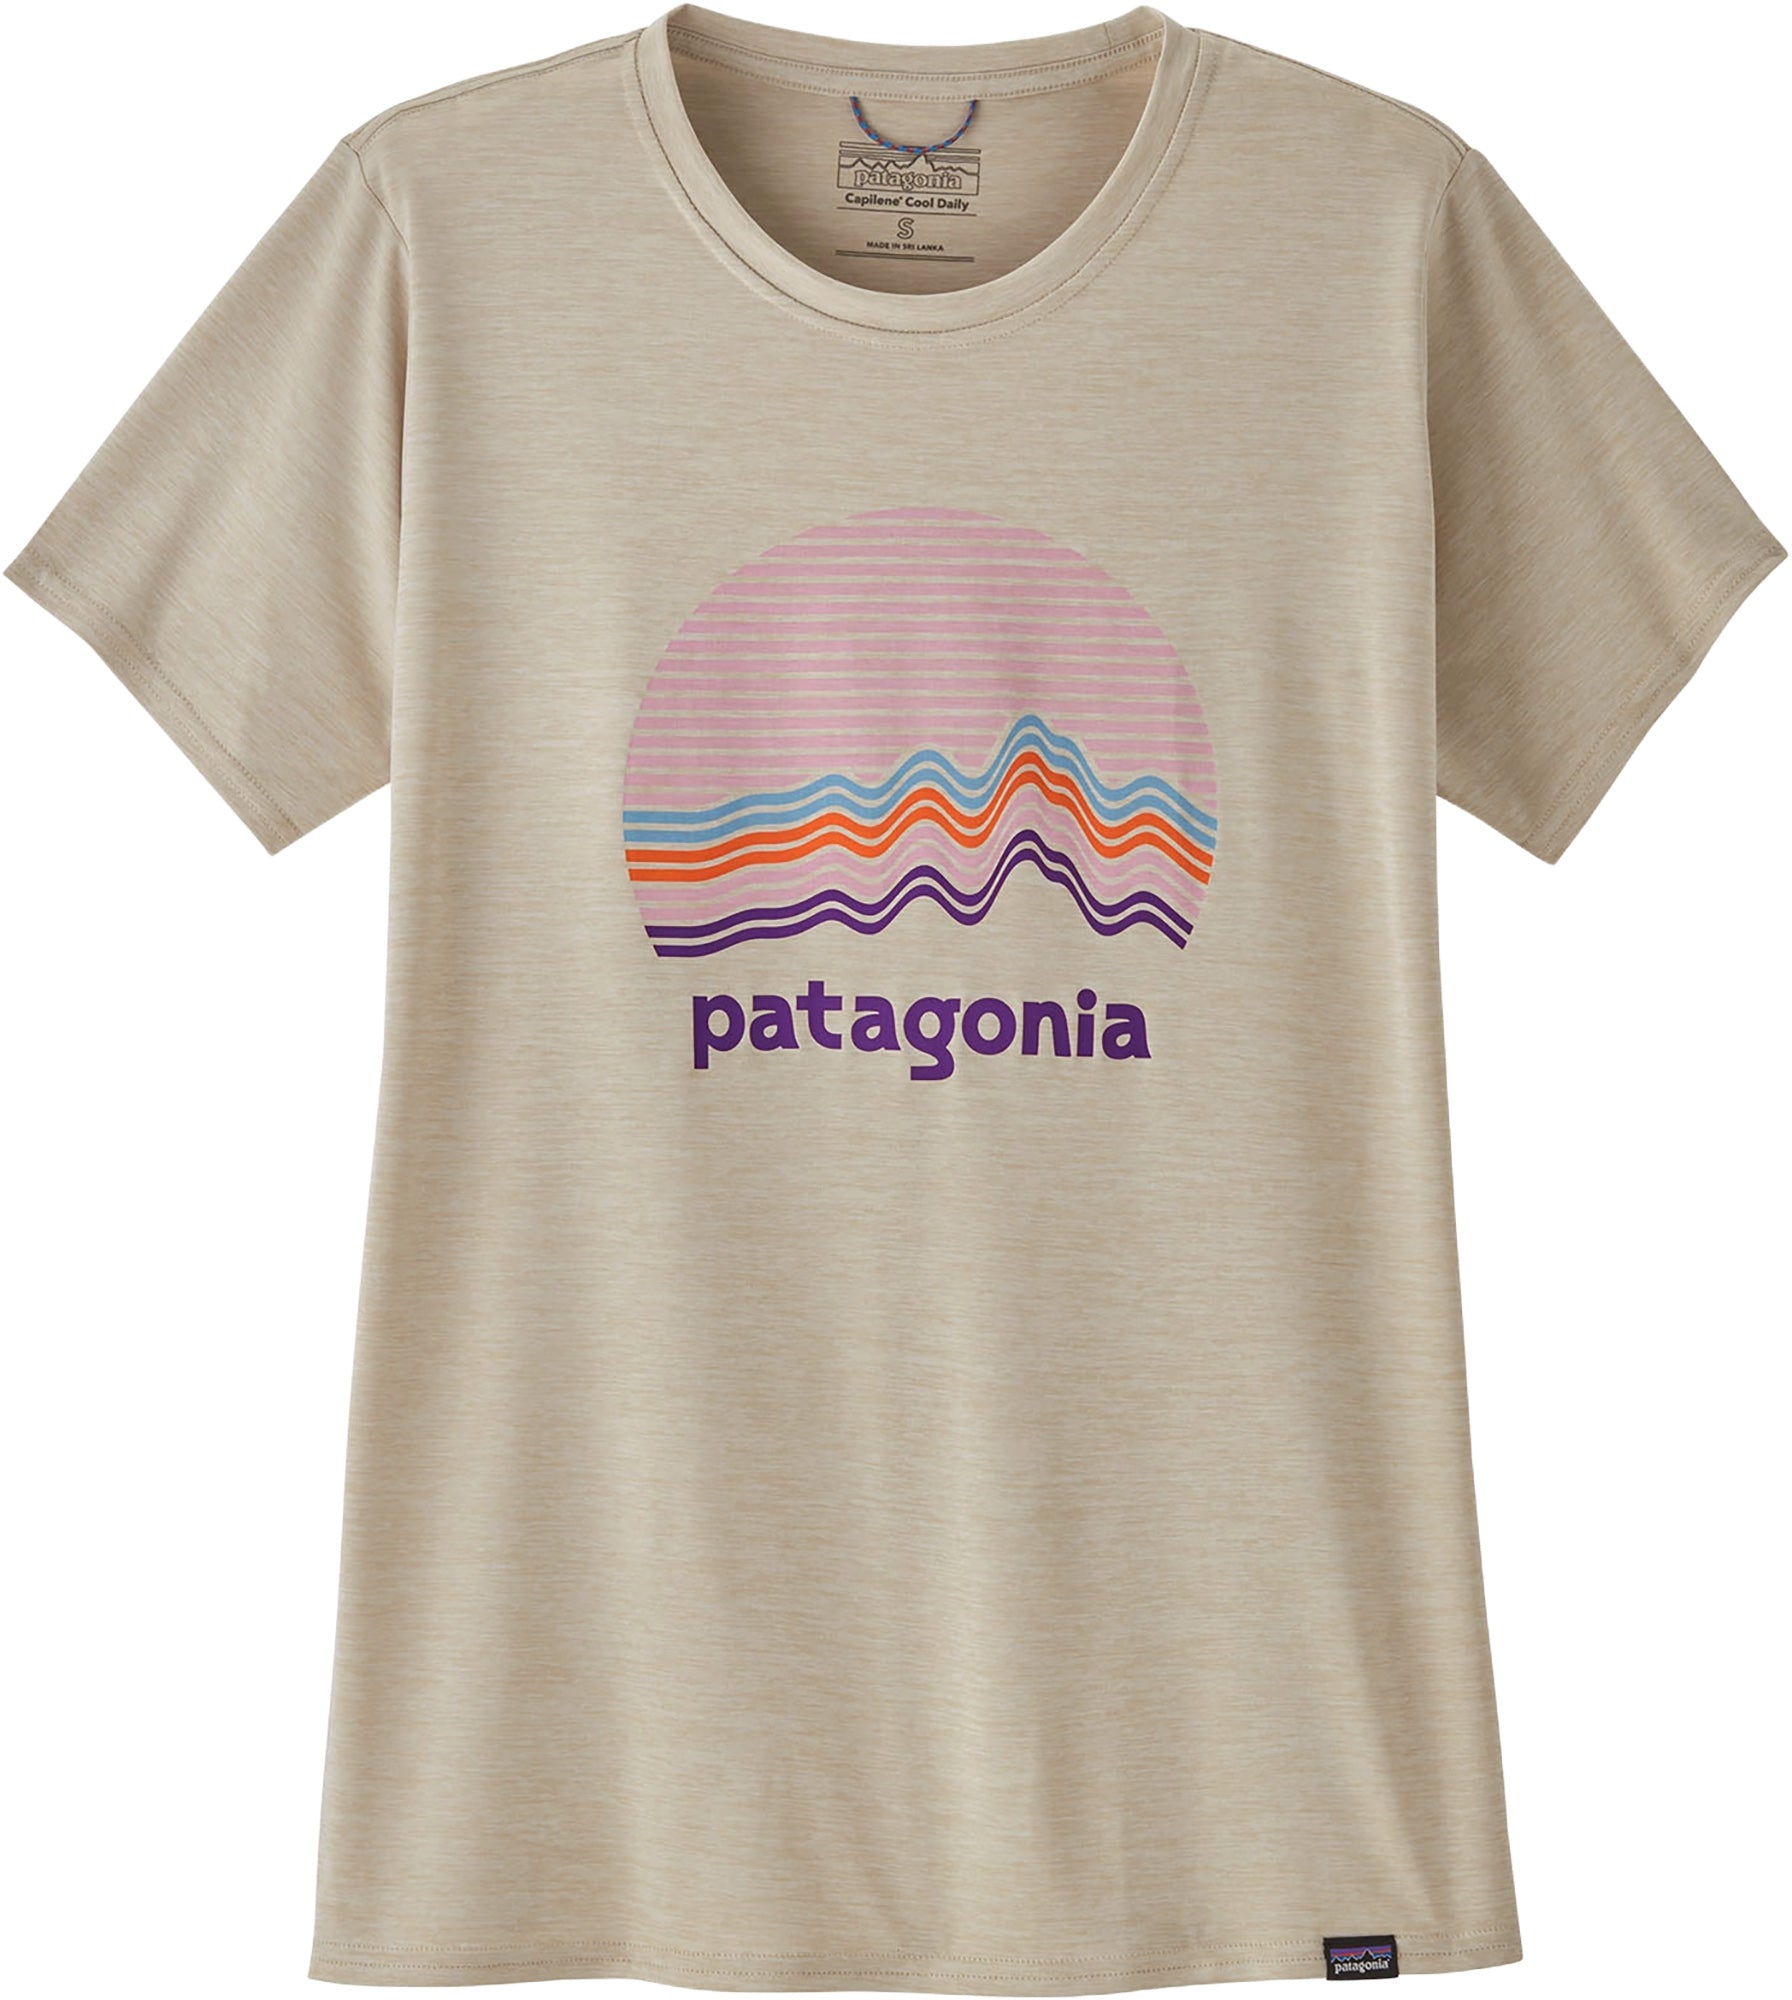 Patagonia Capilene Cool Daily Graphic Shirt - Women's